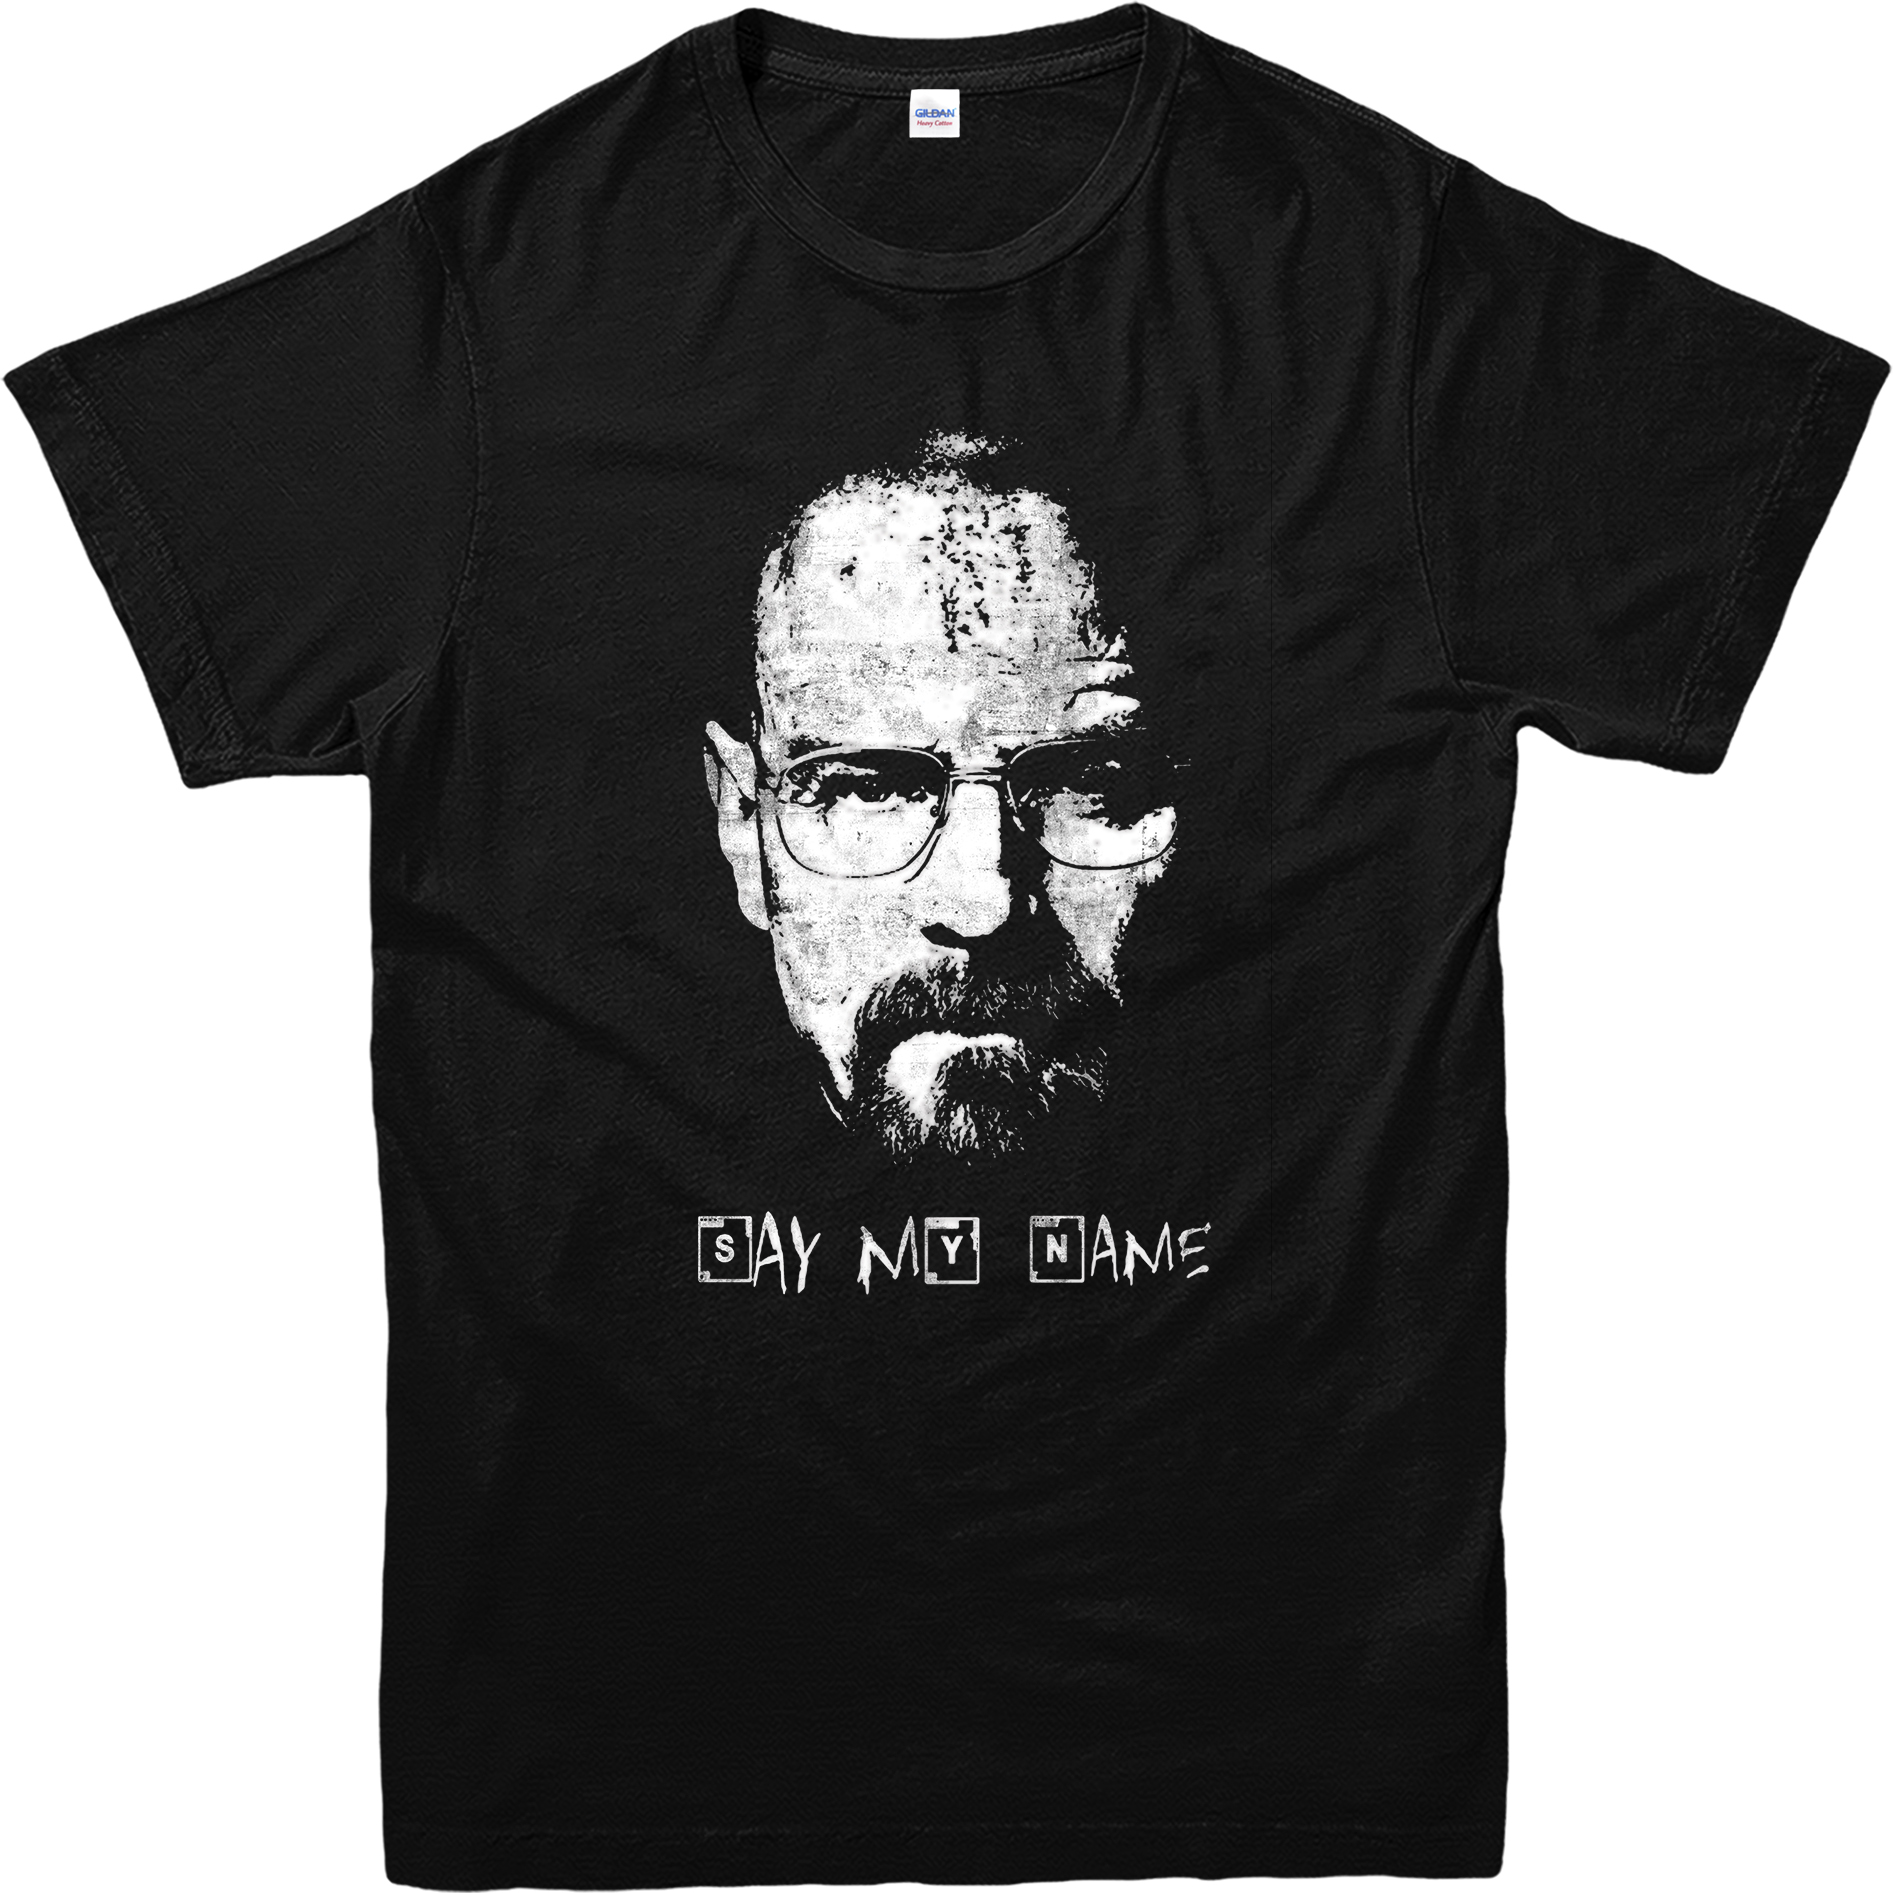 Breaking Bad T-Shirt,Say My Name Spoof T-Shirt, Inspired Design Top | eBay